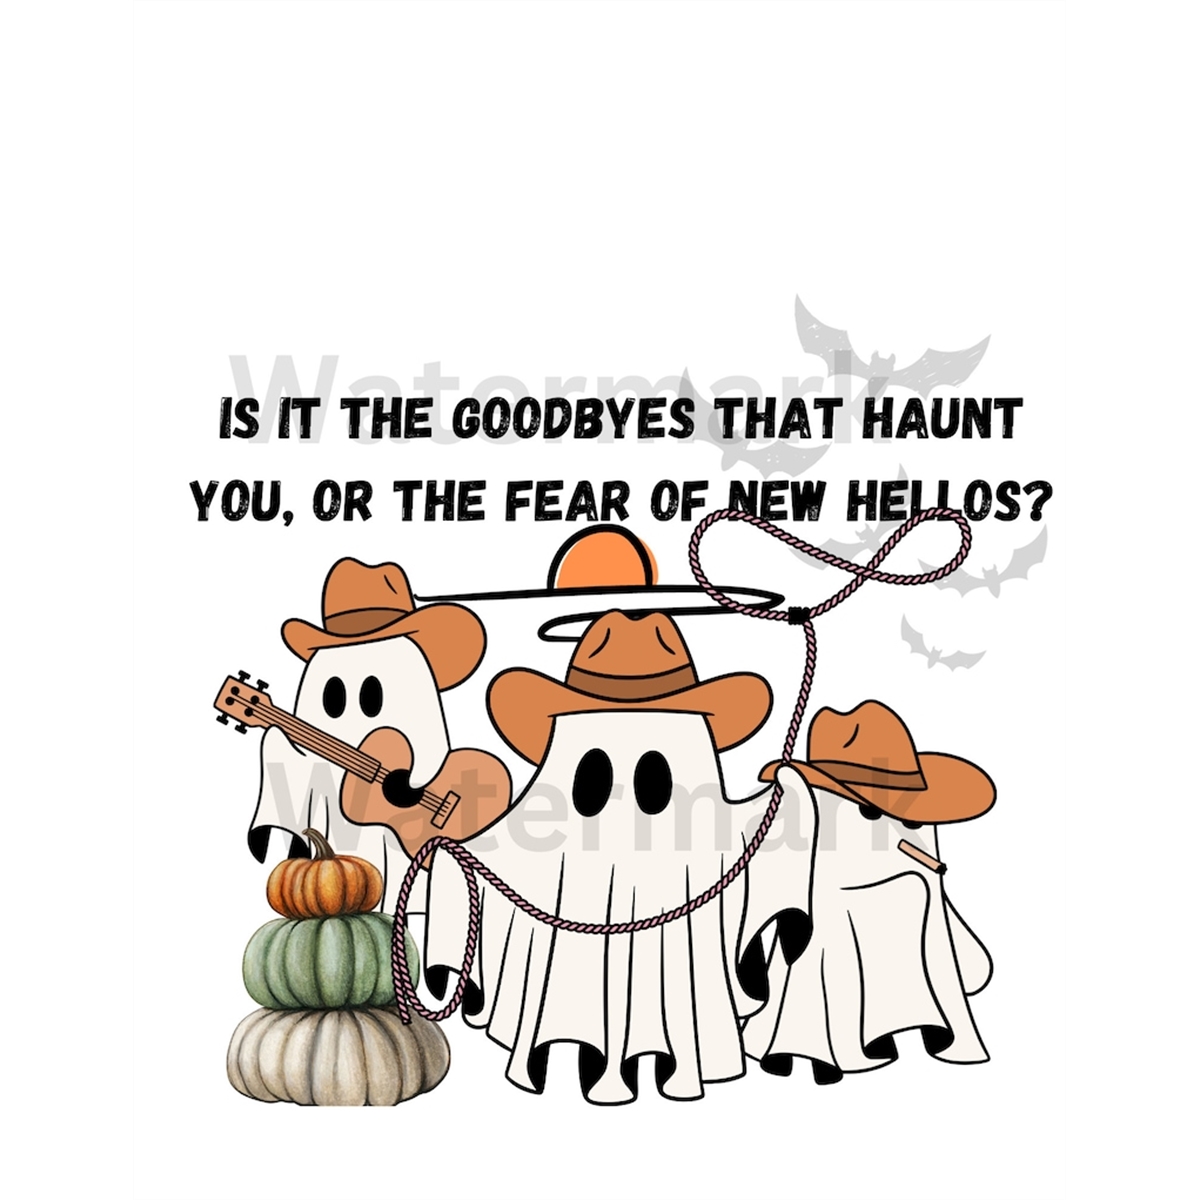 zach-bryan-halloween-ghost-goodbyes-that-haunt-you-tshirt-image-1